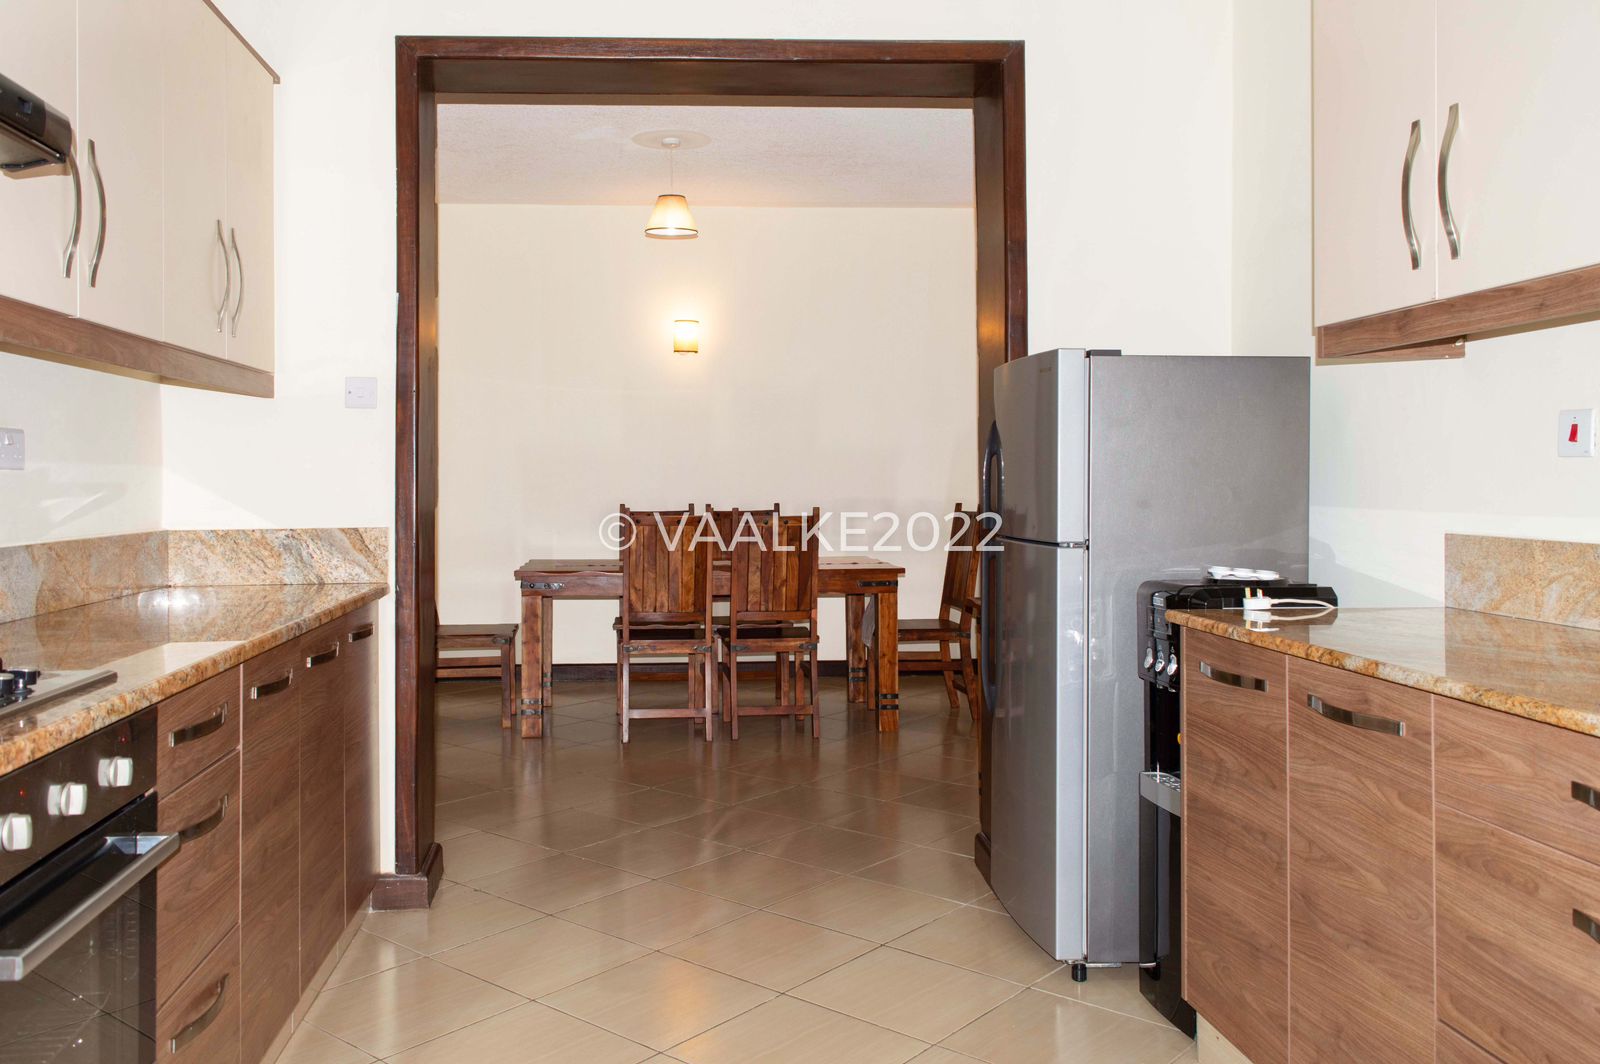 2 bedroom furnished apartments in westlands, nairobi